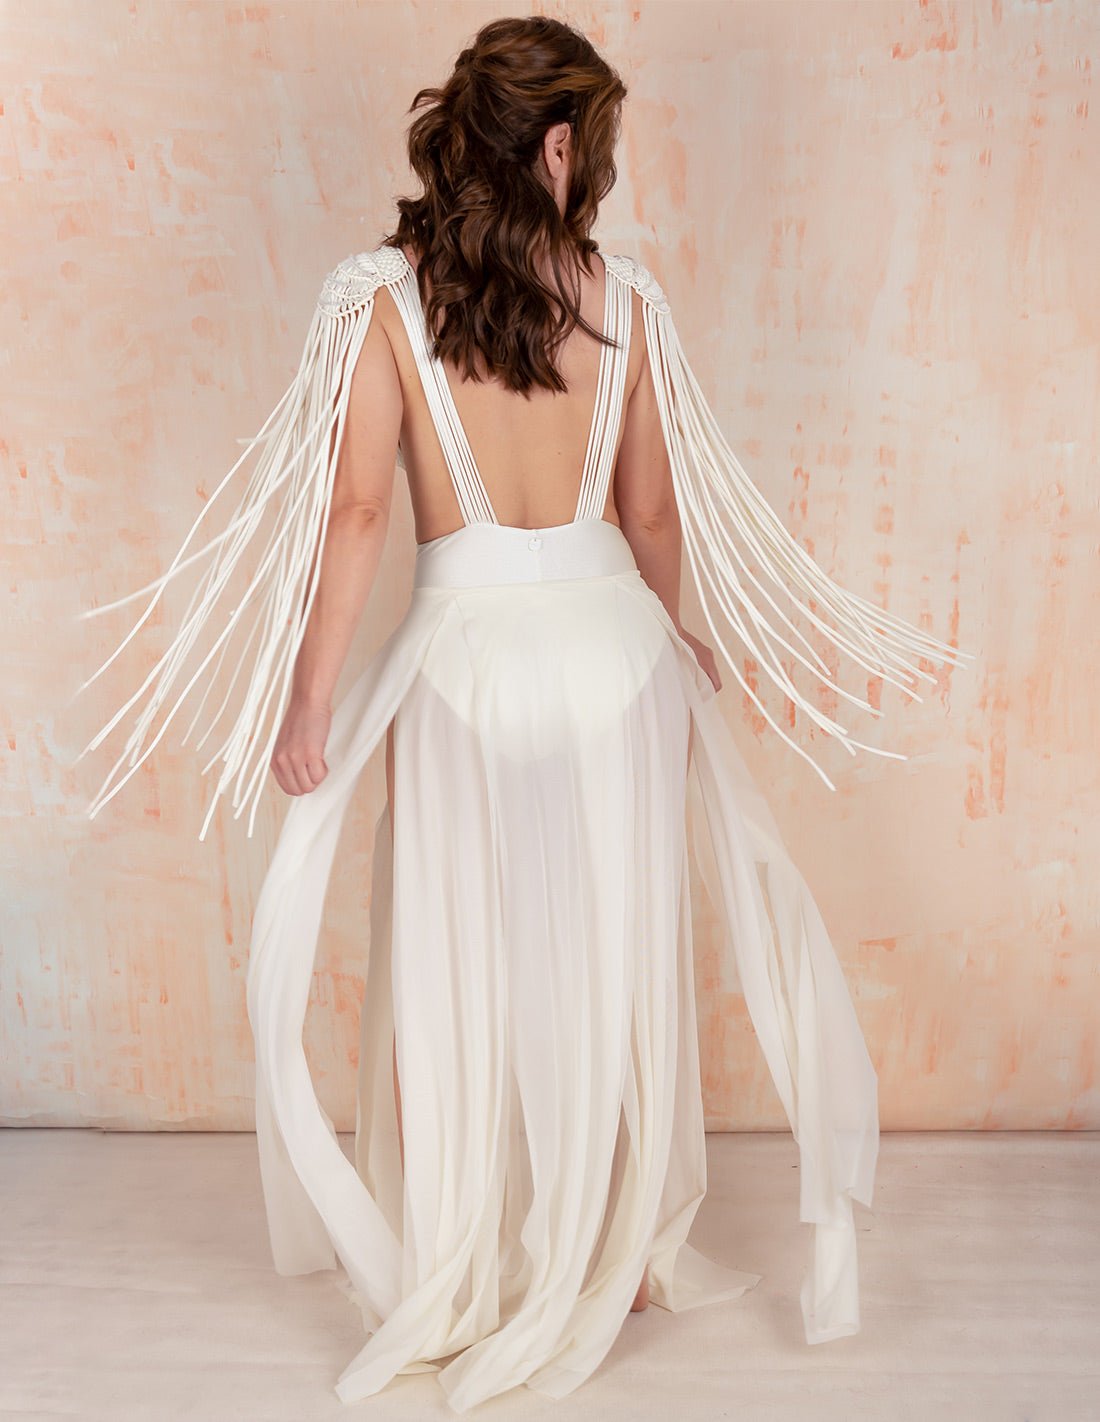 Umbra Dress With Murano Crystals - Dress - Entreaguas Wearable Art